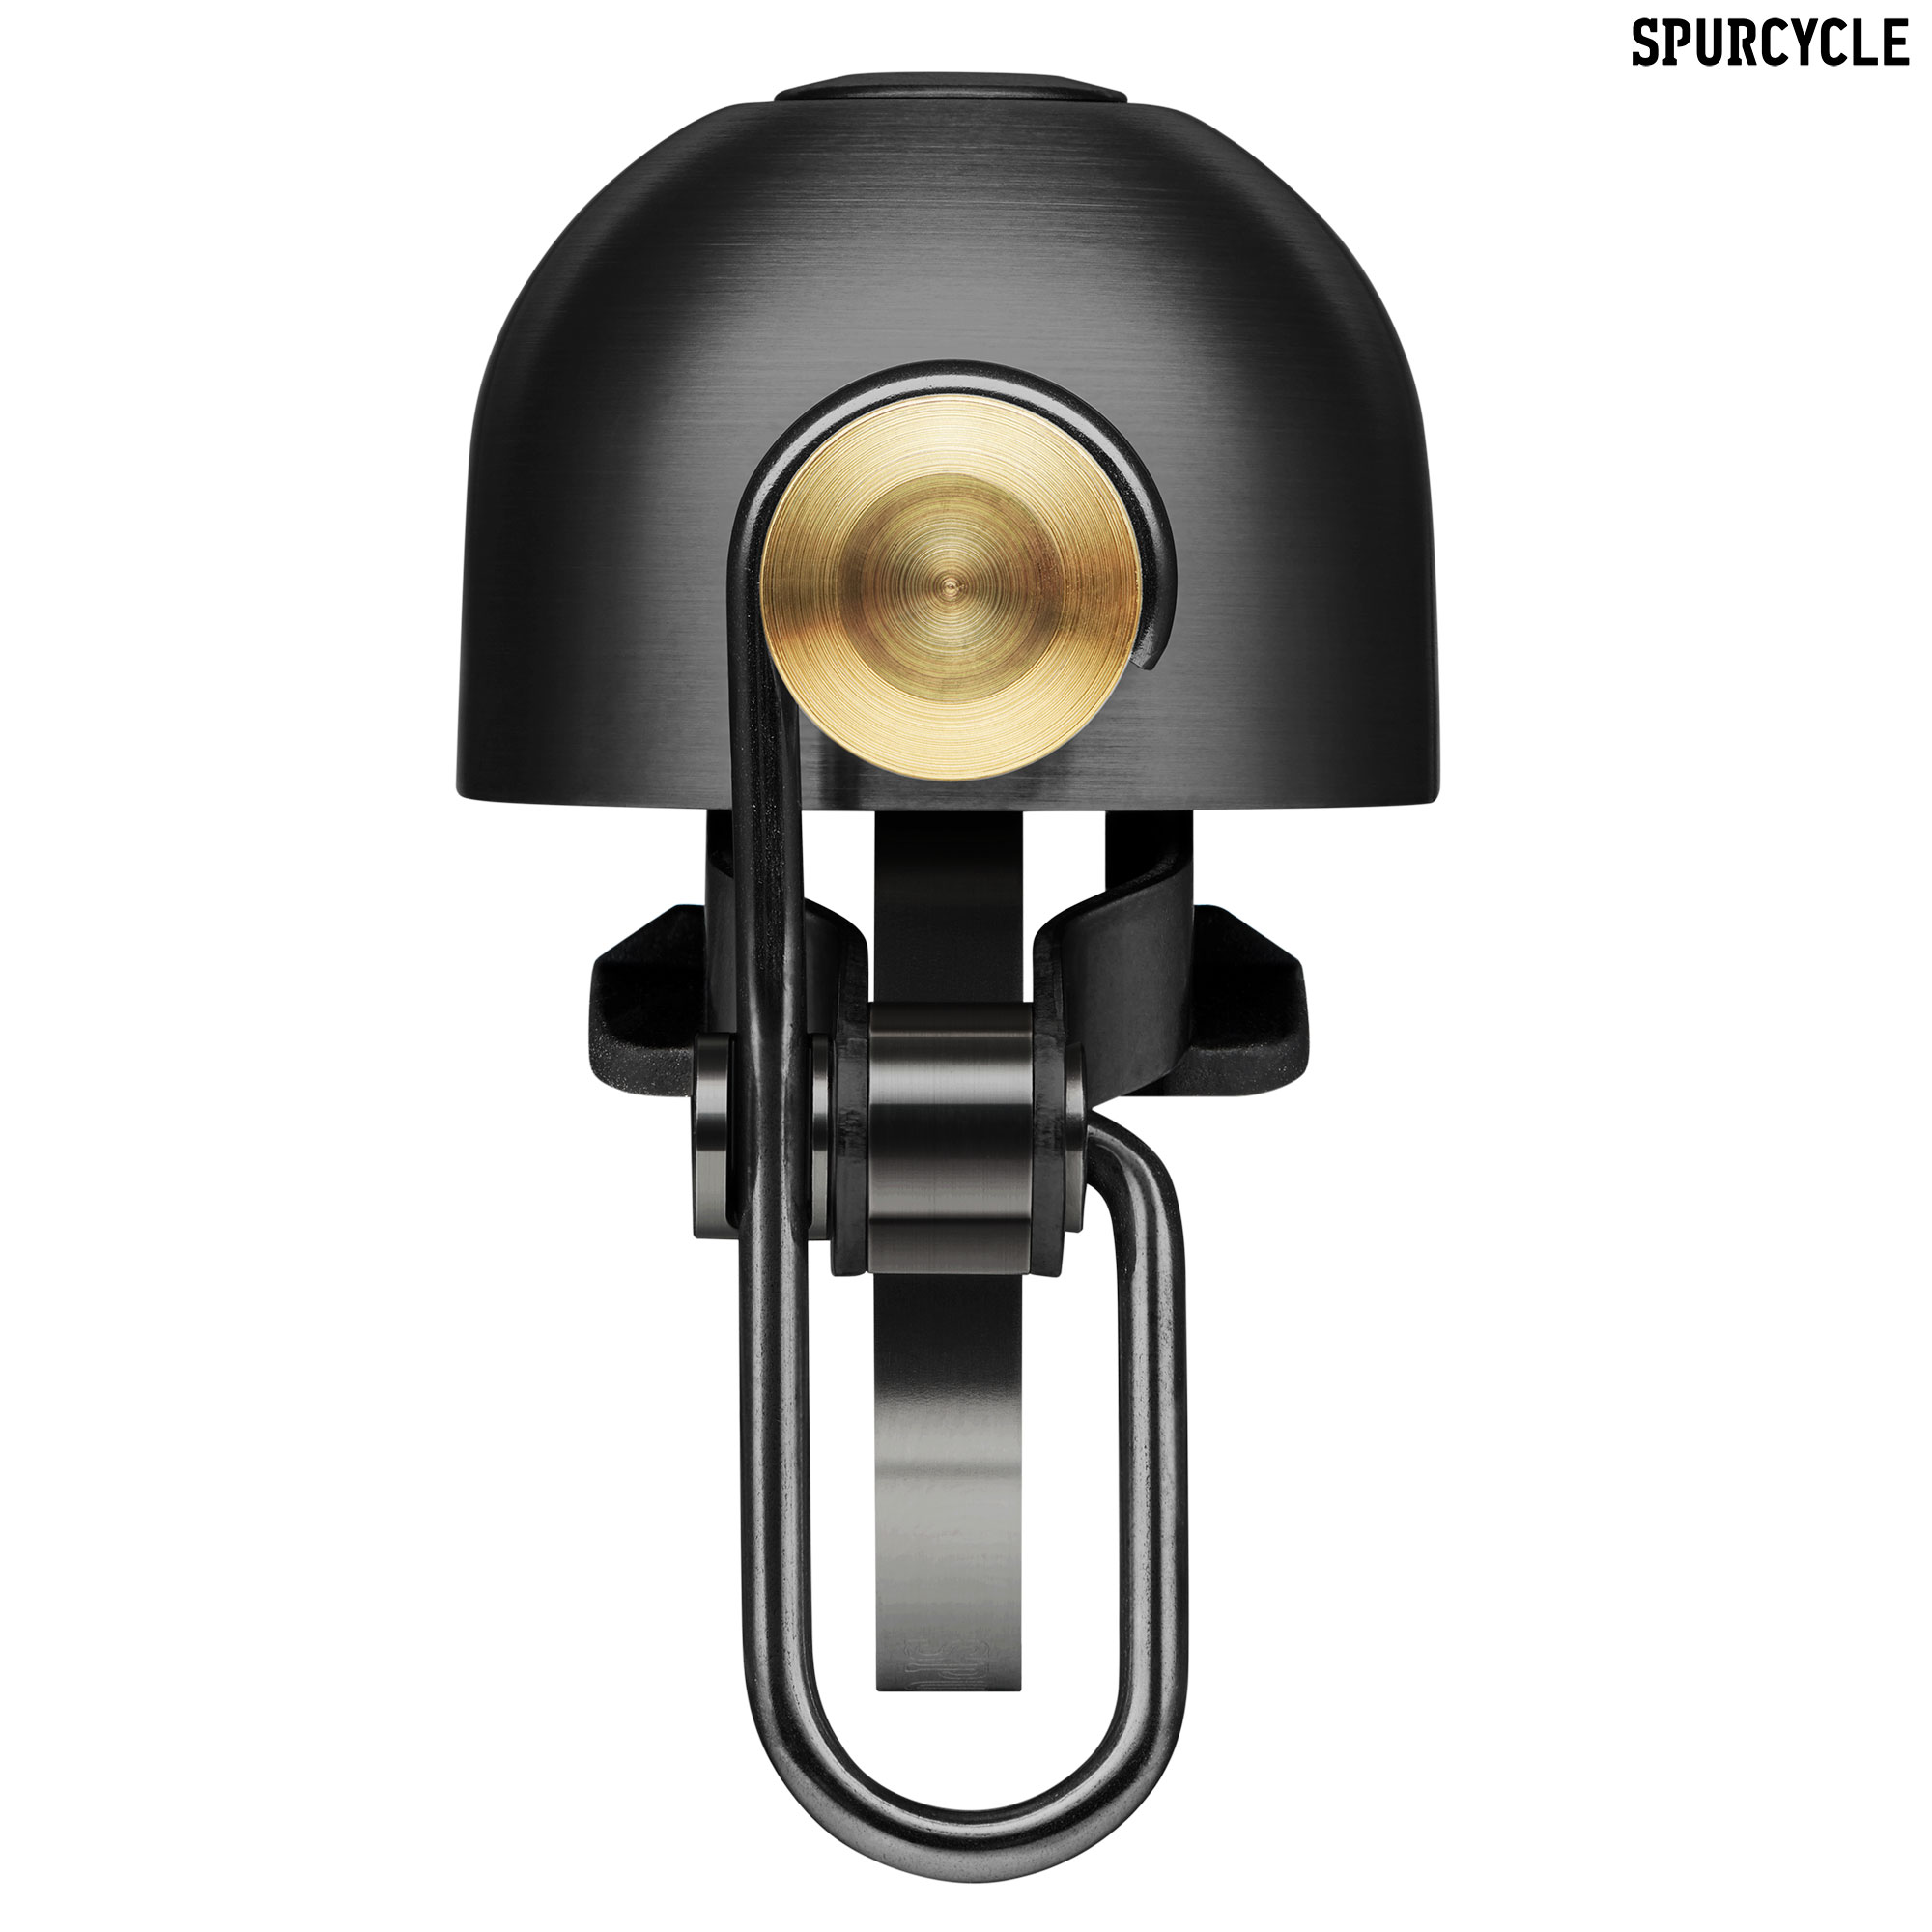 SpurCycle Original Bell - Black DLC